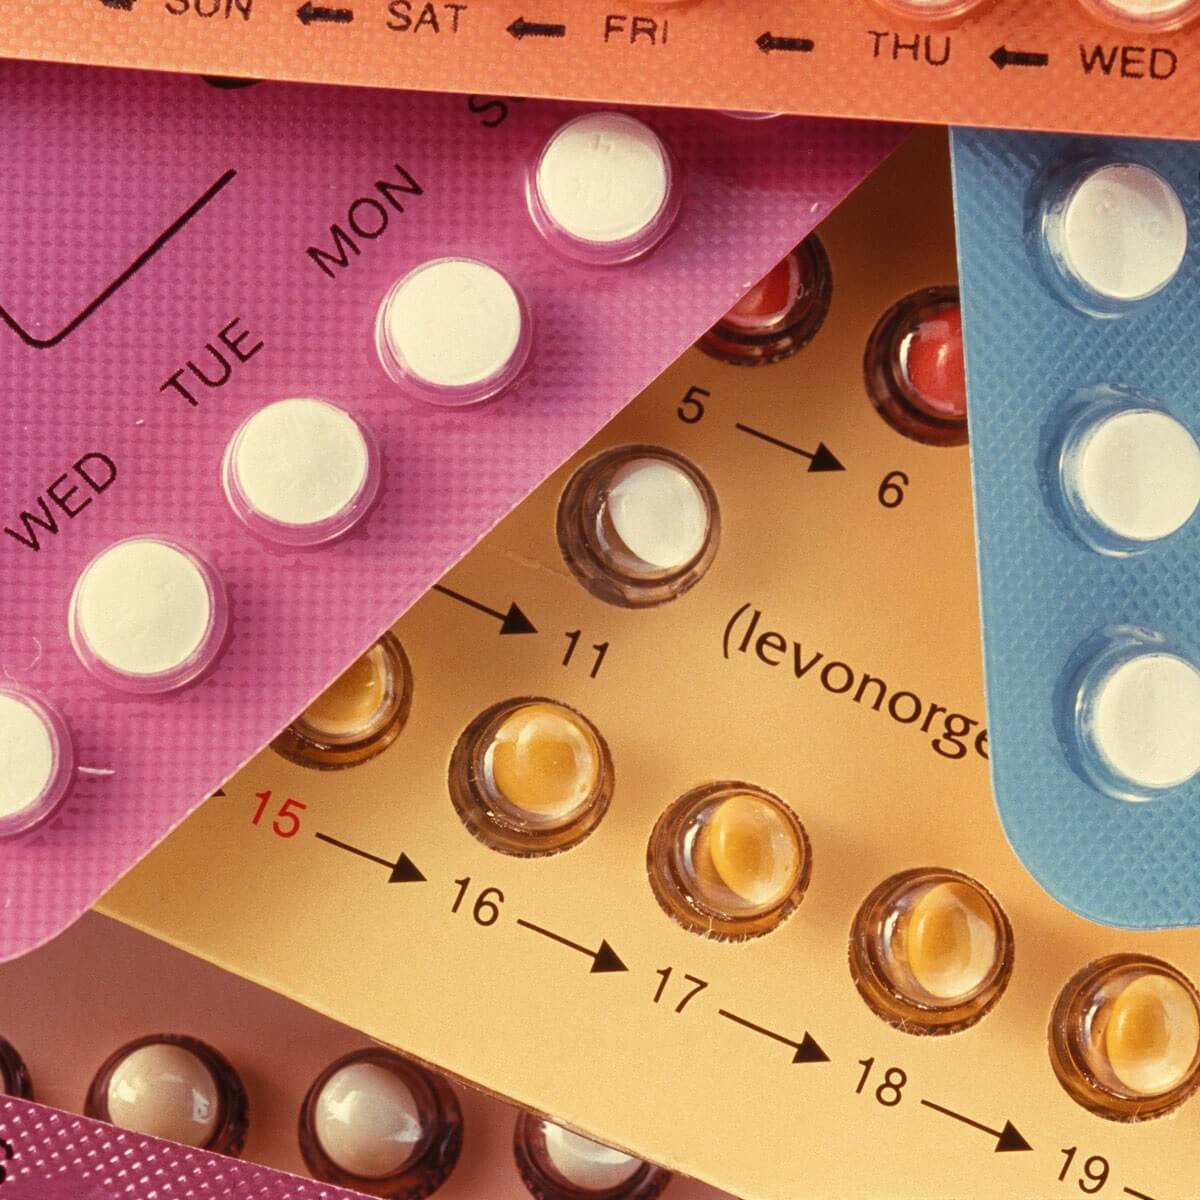 A close up of contraceptive pills